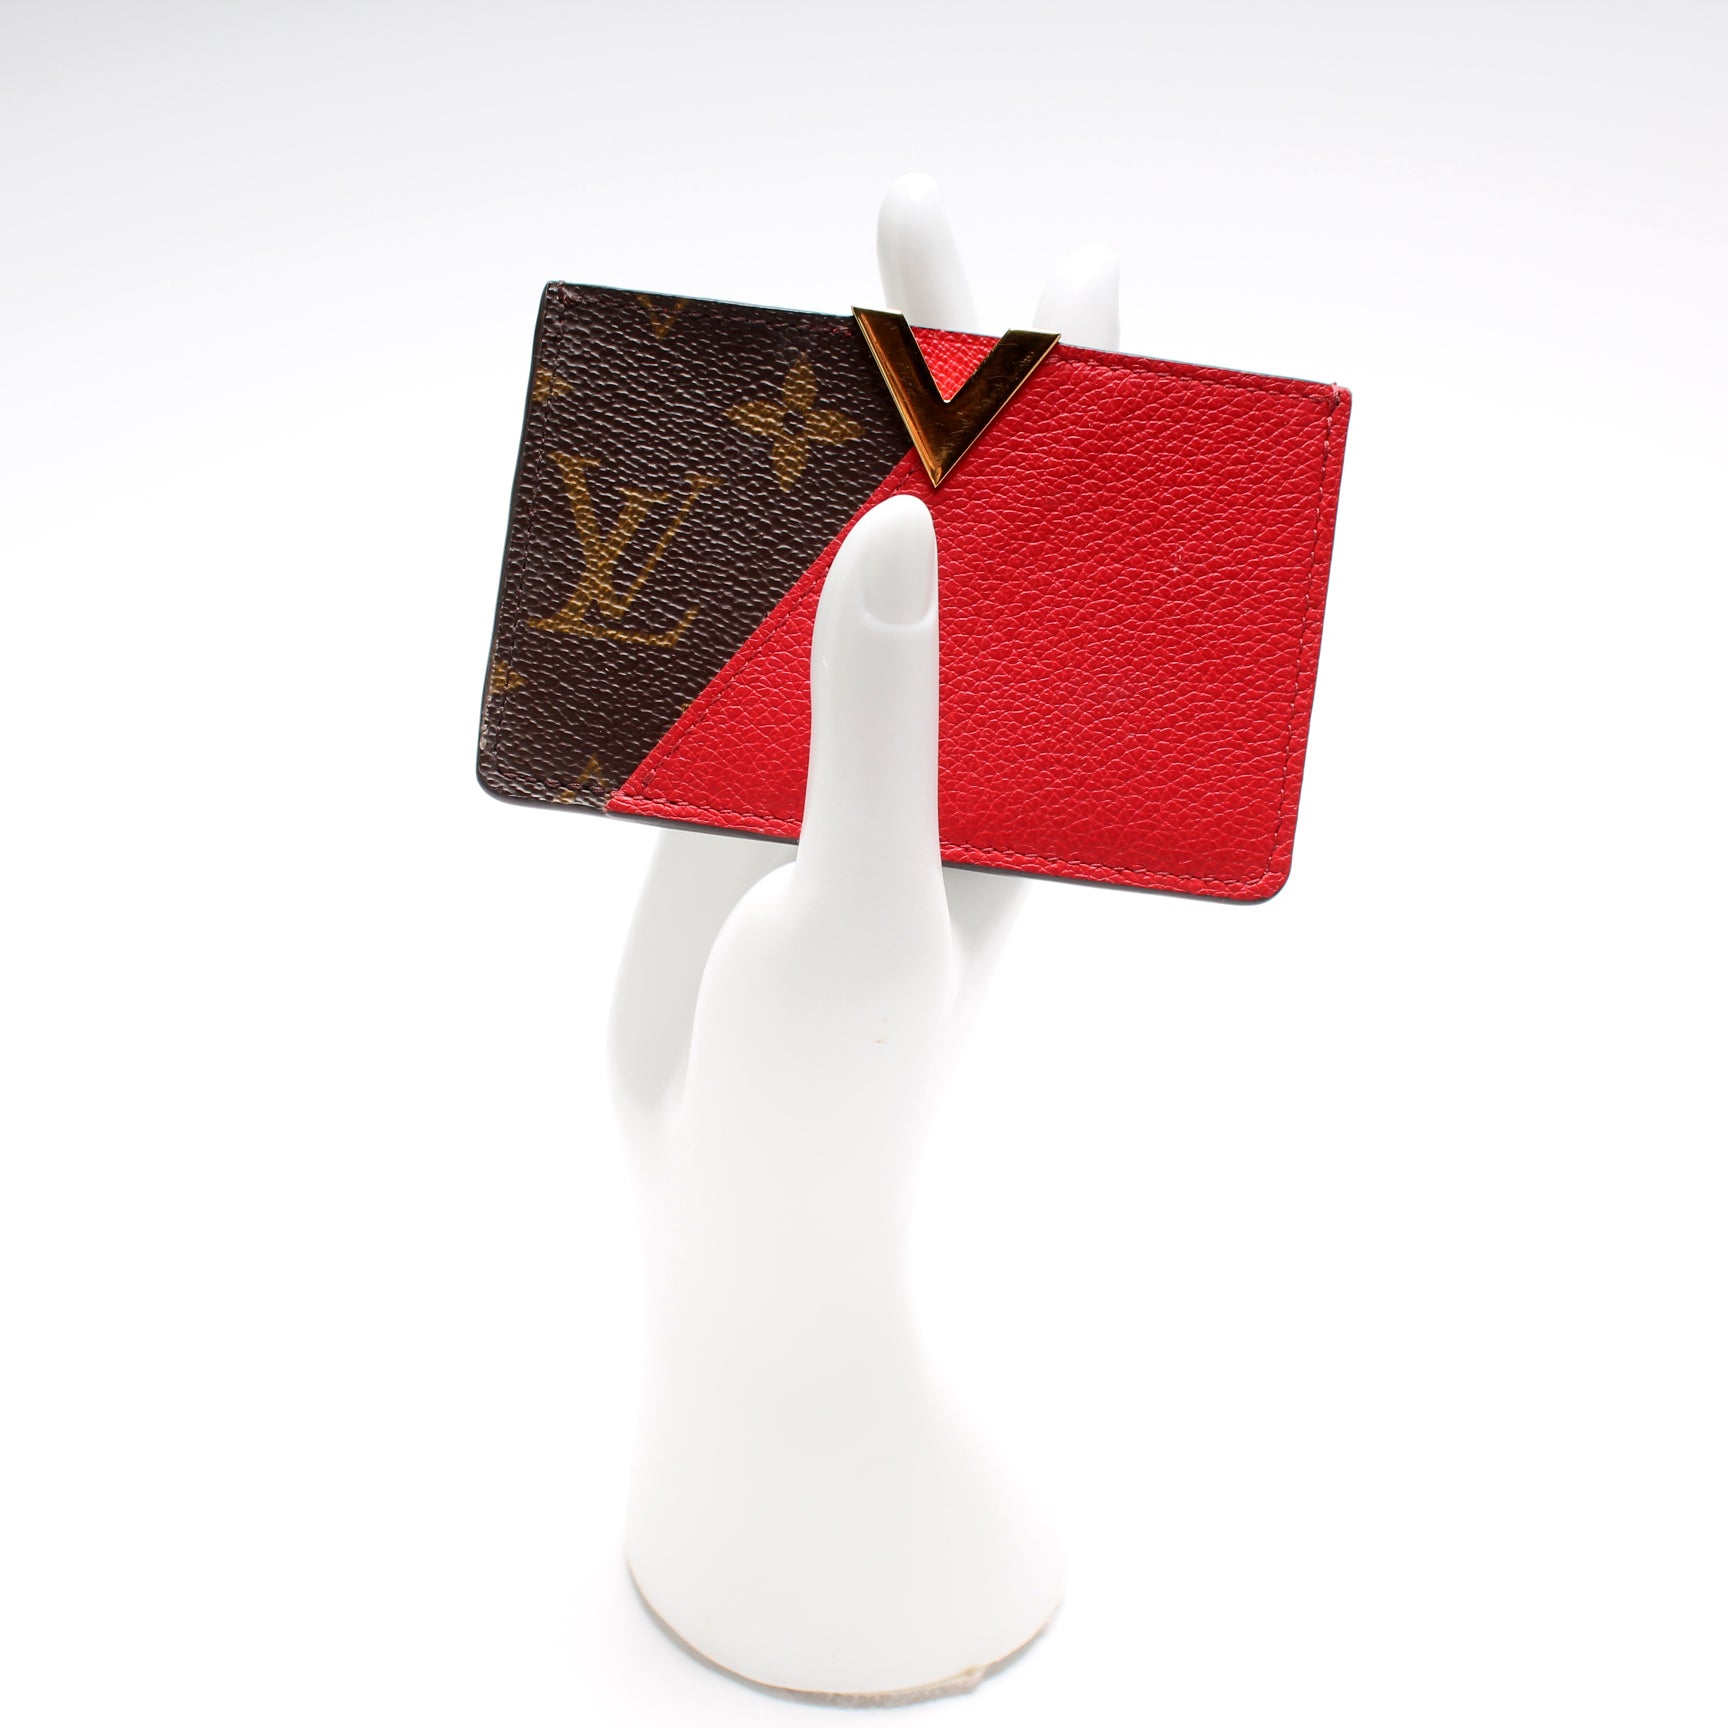 Authentic LOUIS VUITTON Porte Cartes Kimono Card Holder M56172